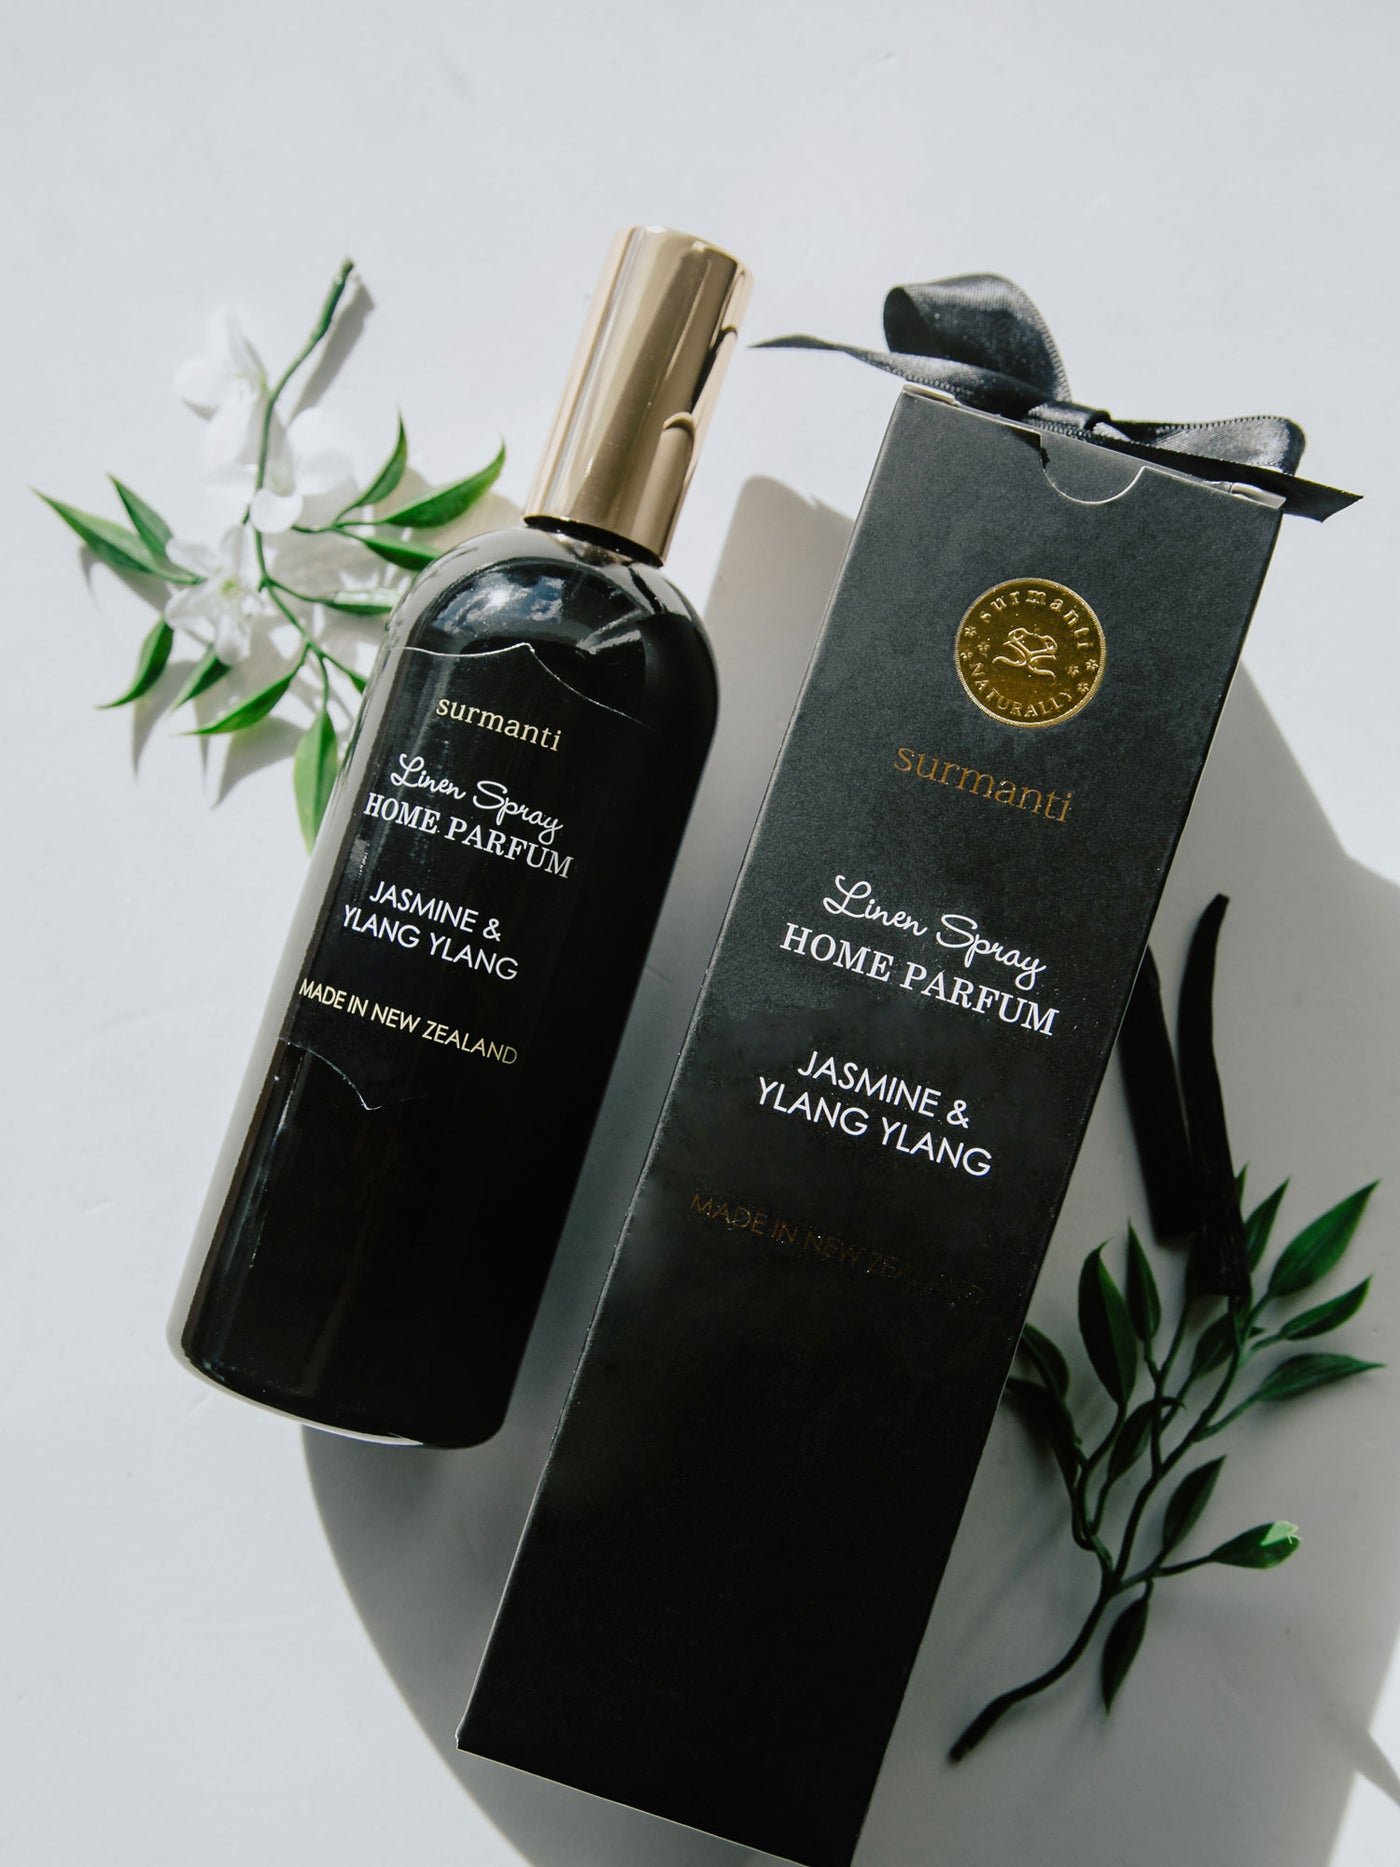 Jasmine & Ylang Ylang Linen Spray Home Parfum (200 ml) - Surmanti - Made In New Zealand